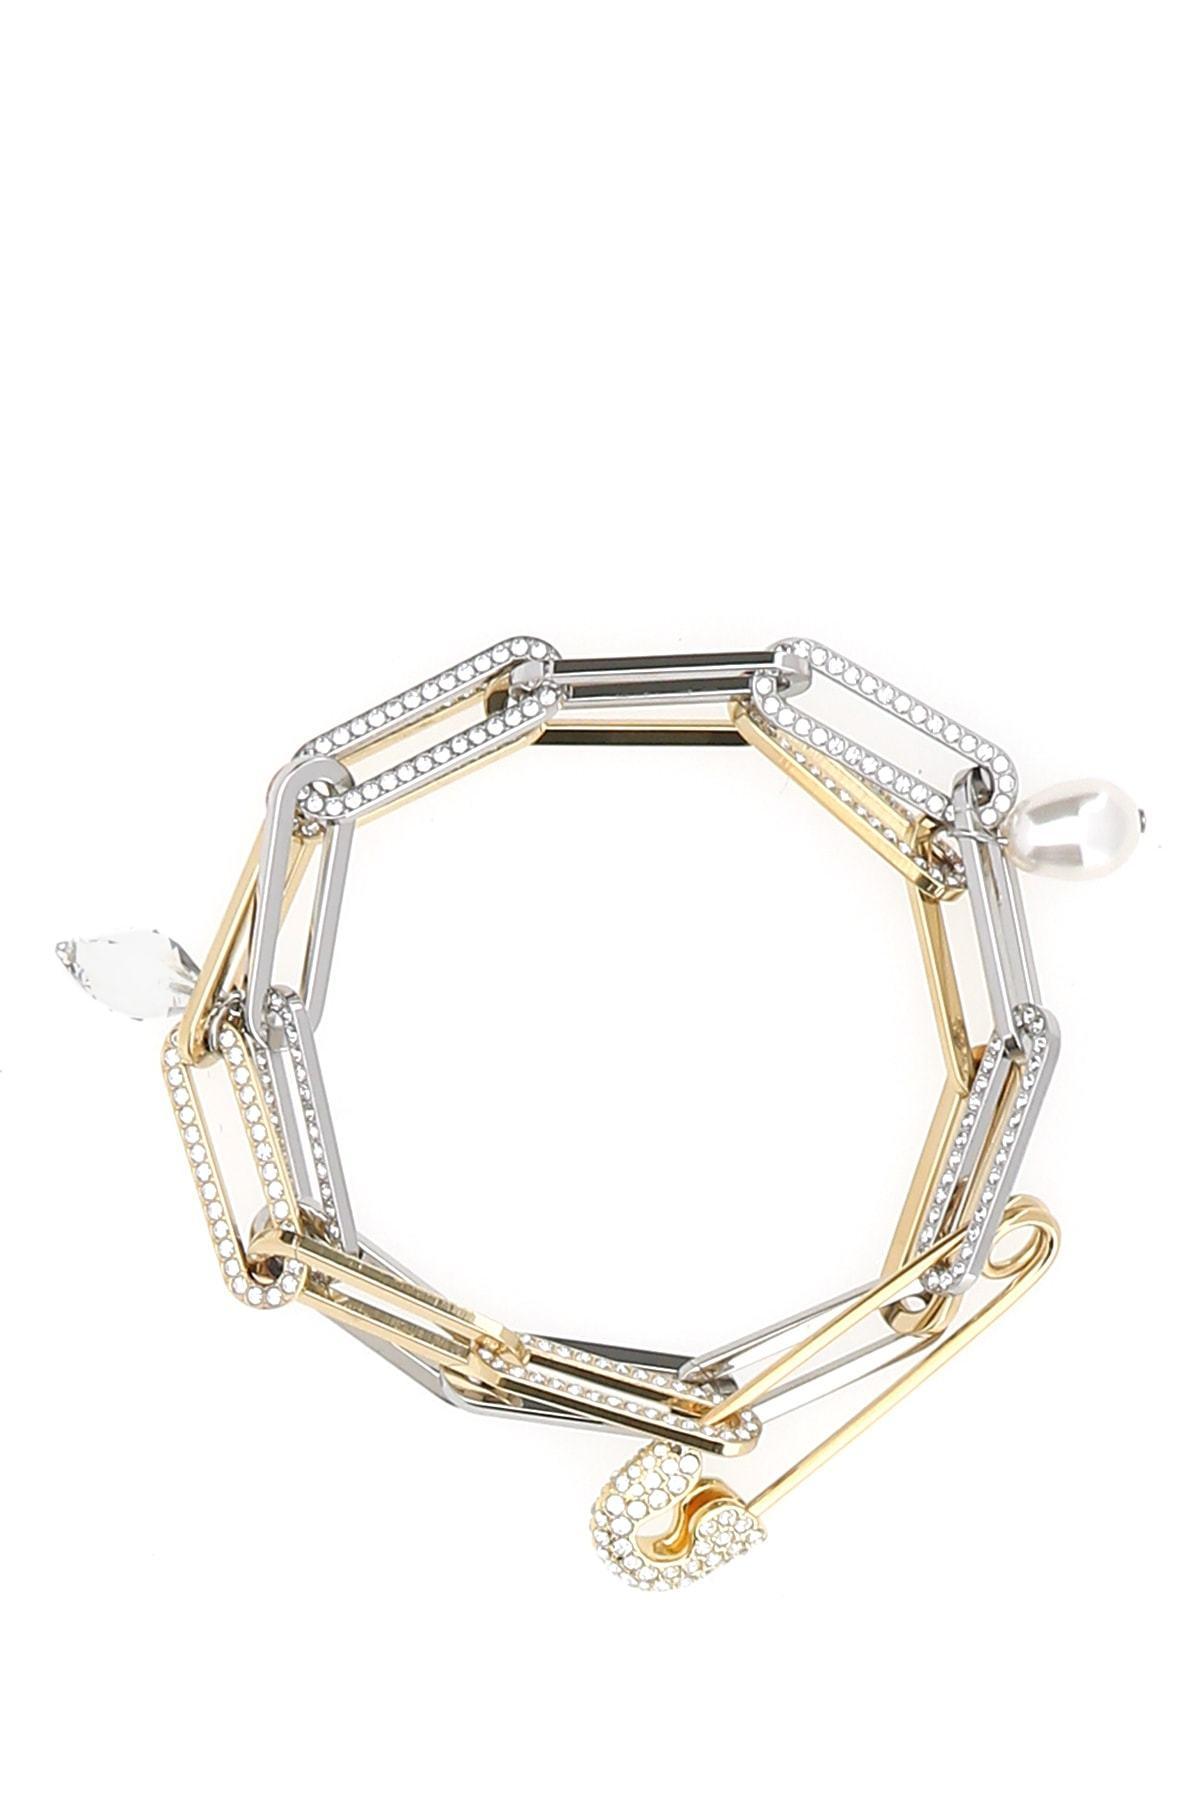 Swarovski So Cool Chain Bracelet Best Sale - www.illva.com 1693127849